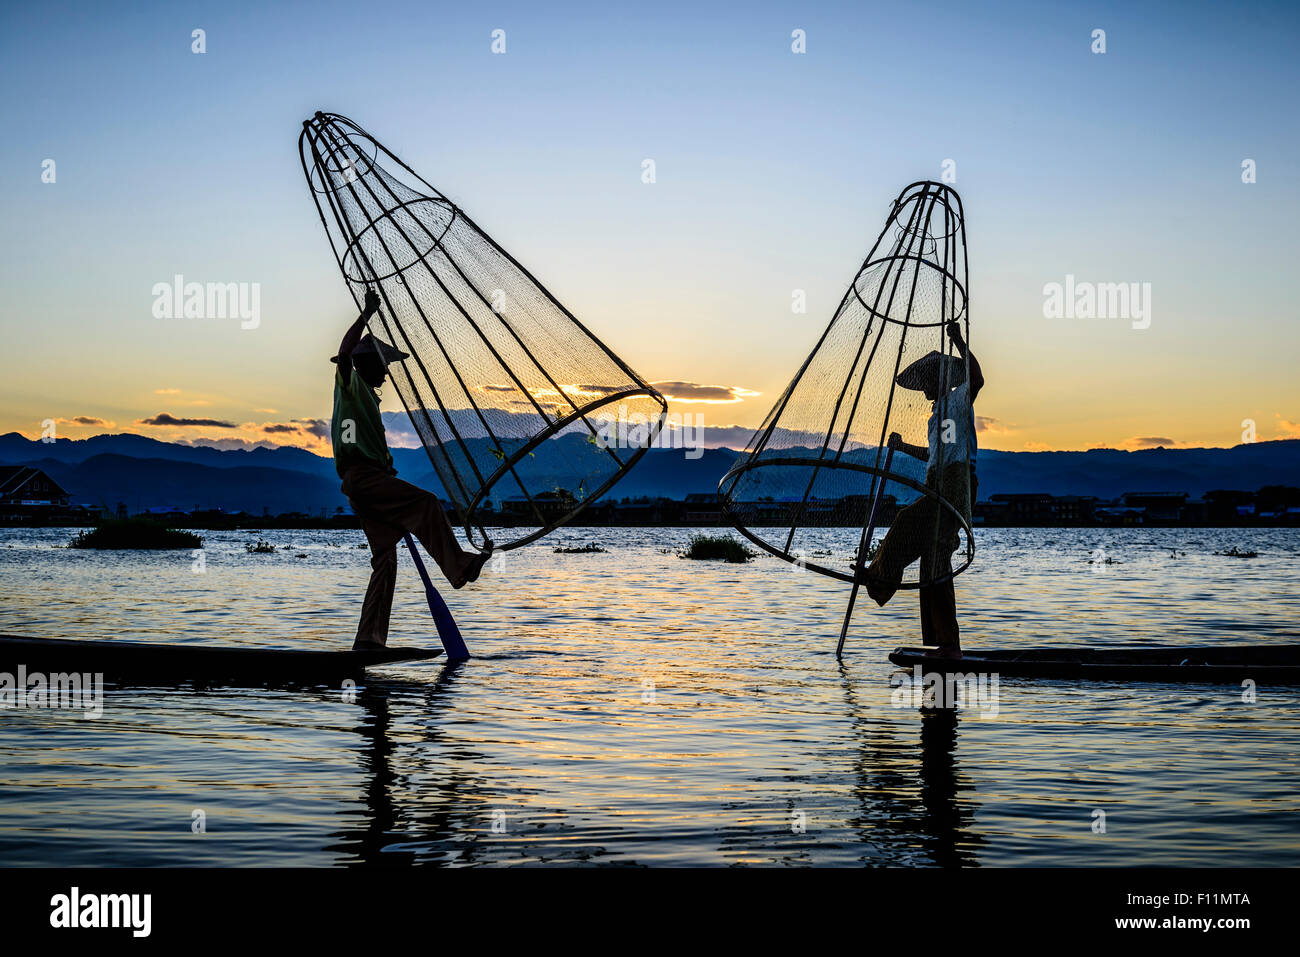 Asian fishermen using fishing nets in canoe on river Stock Photo